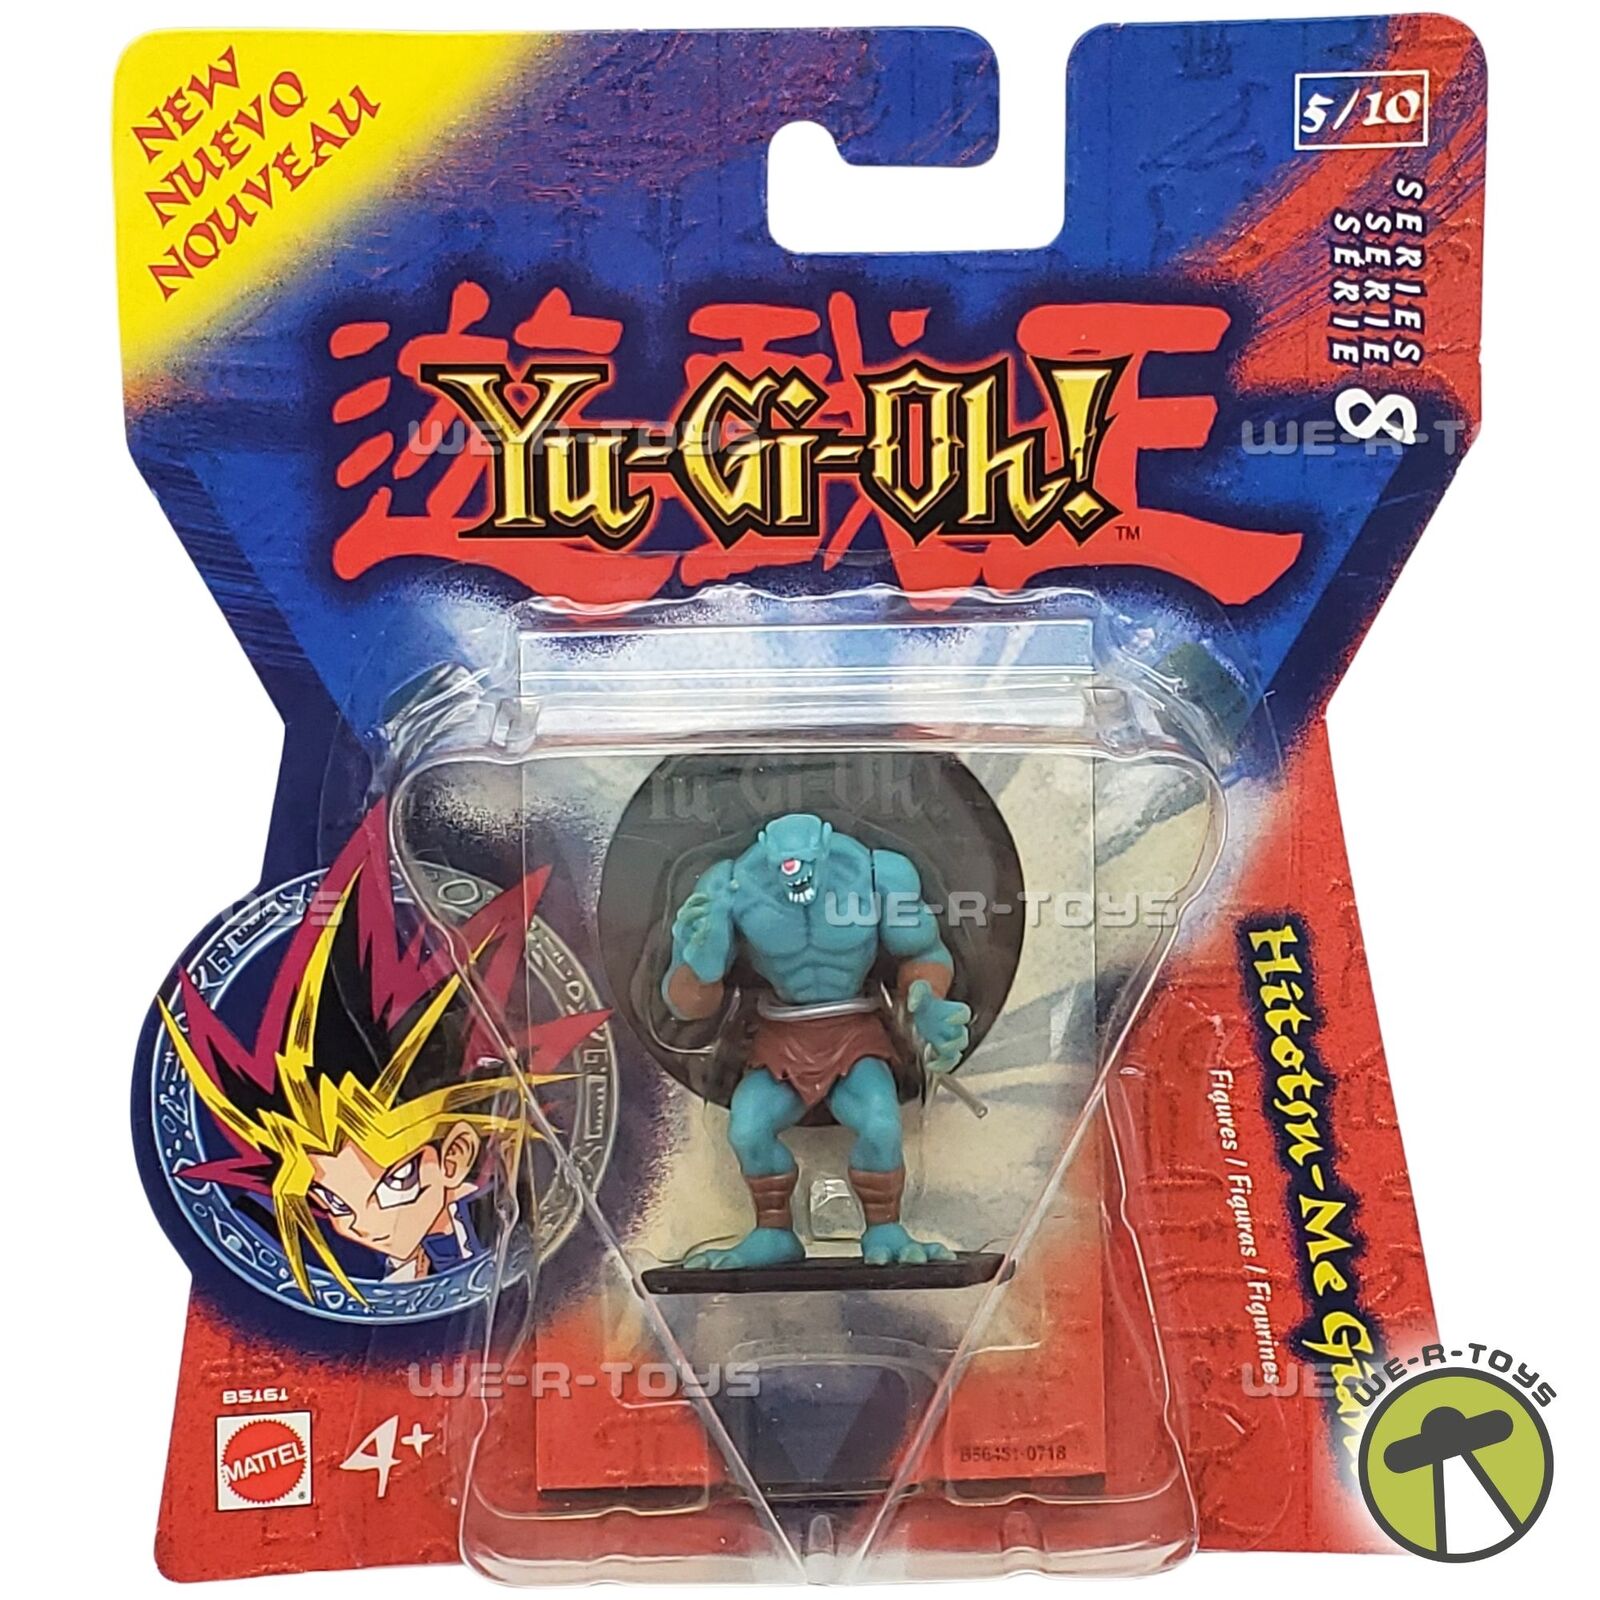 Yu-Gi-Oh Hitotsu-Me Giant Figure 5/10 With Holo-Tile Series 8 Mattel B5161 NRFP